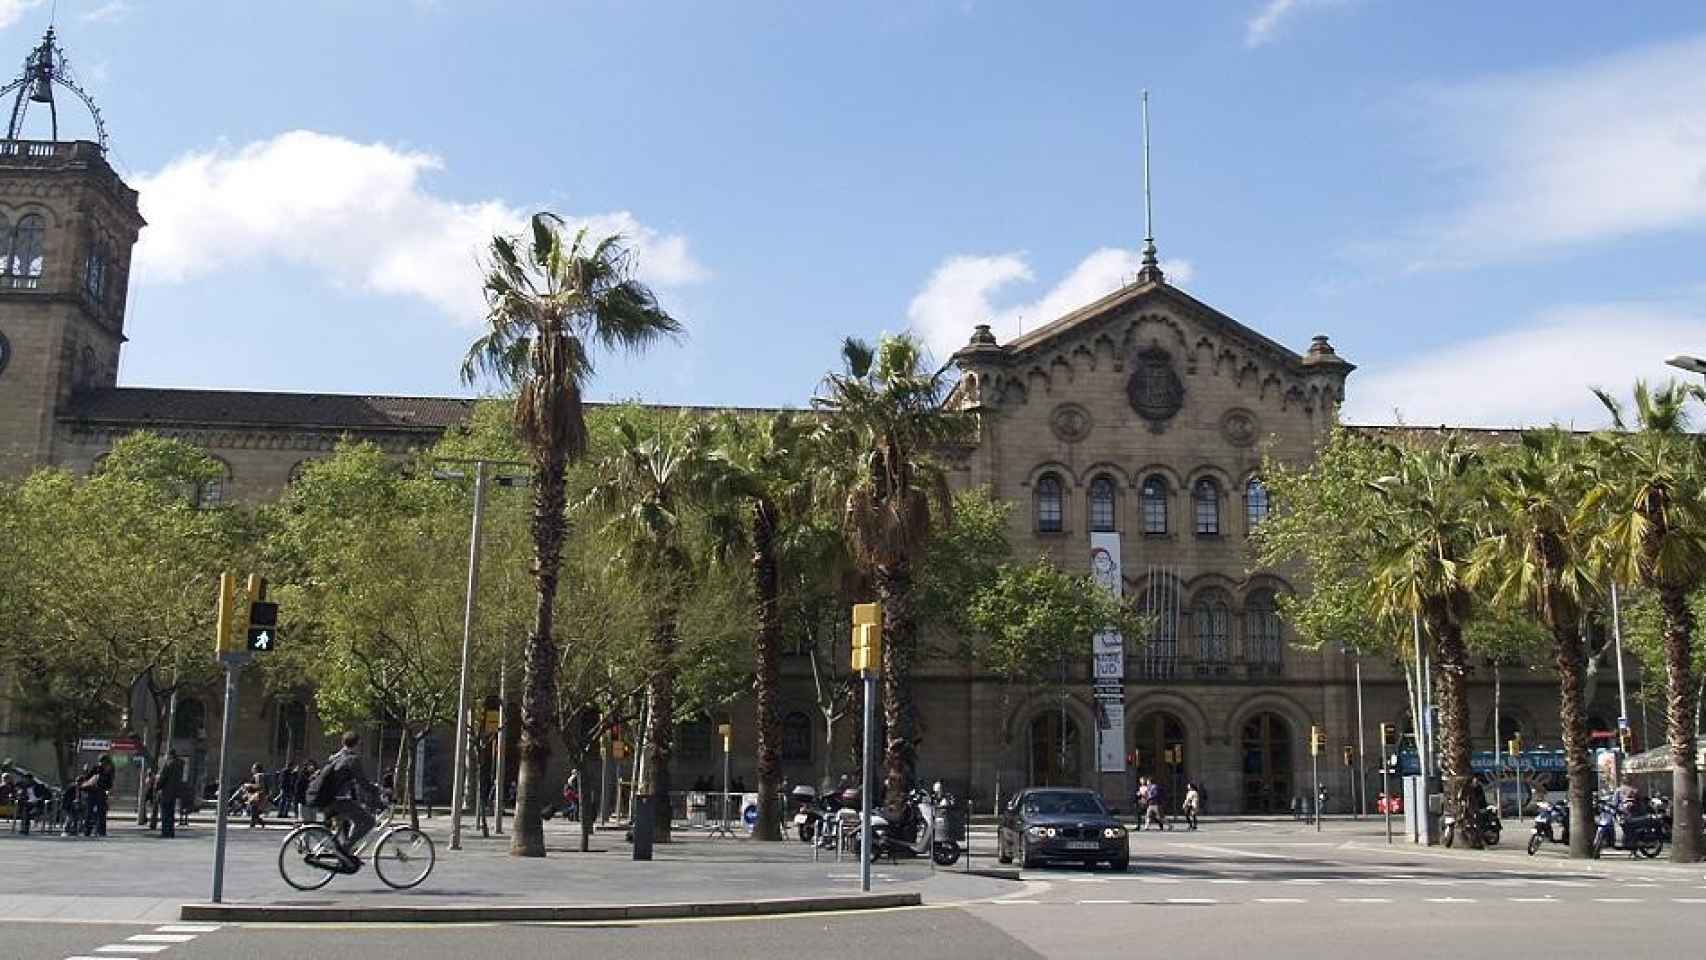 Una universidad catalana, la UB / Vanbasten 23 EN WIKIMEDIA COMMONS